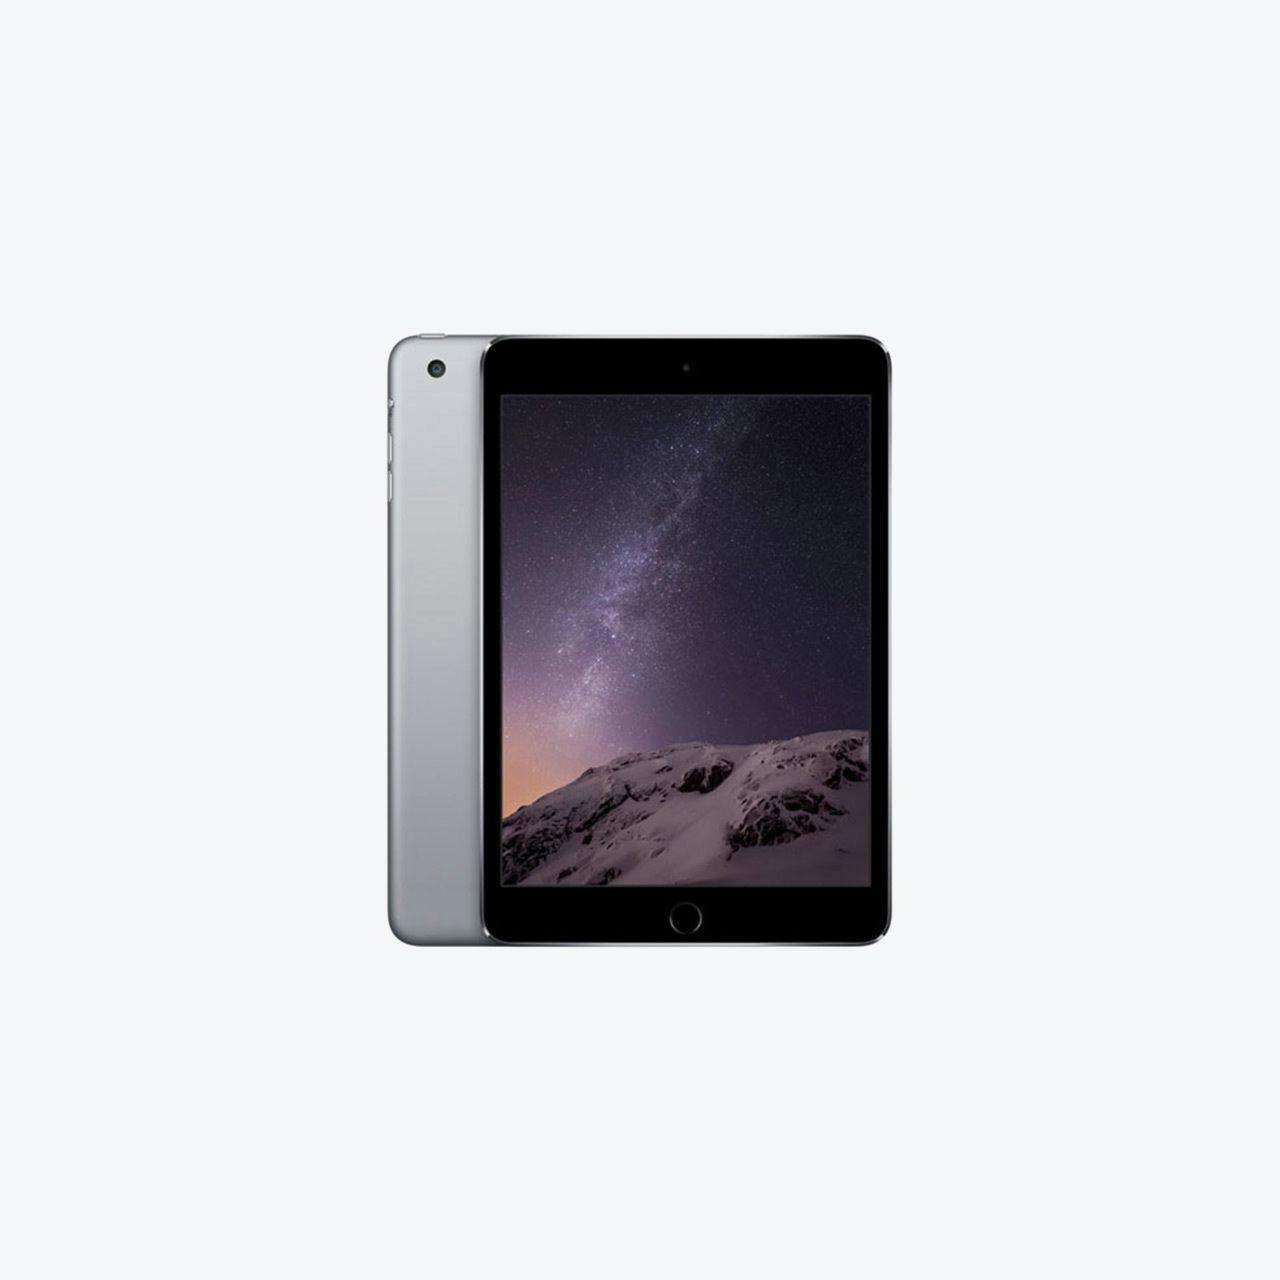 Image of iPad mini 3.